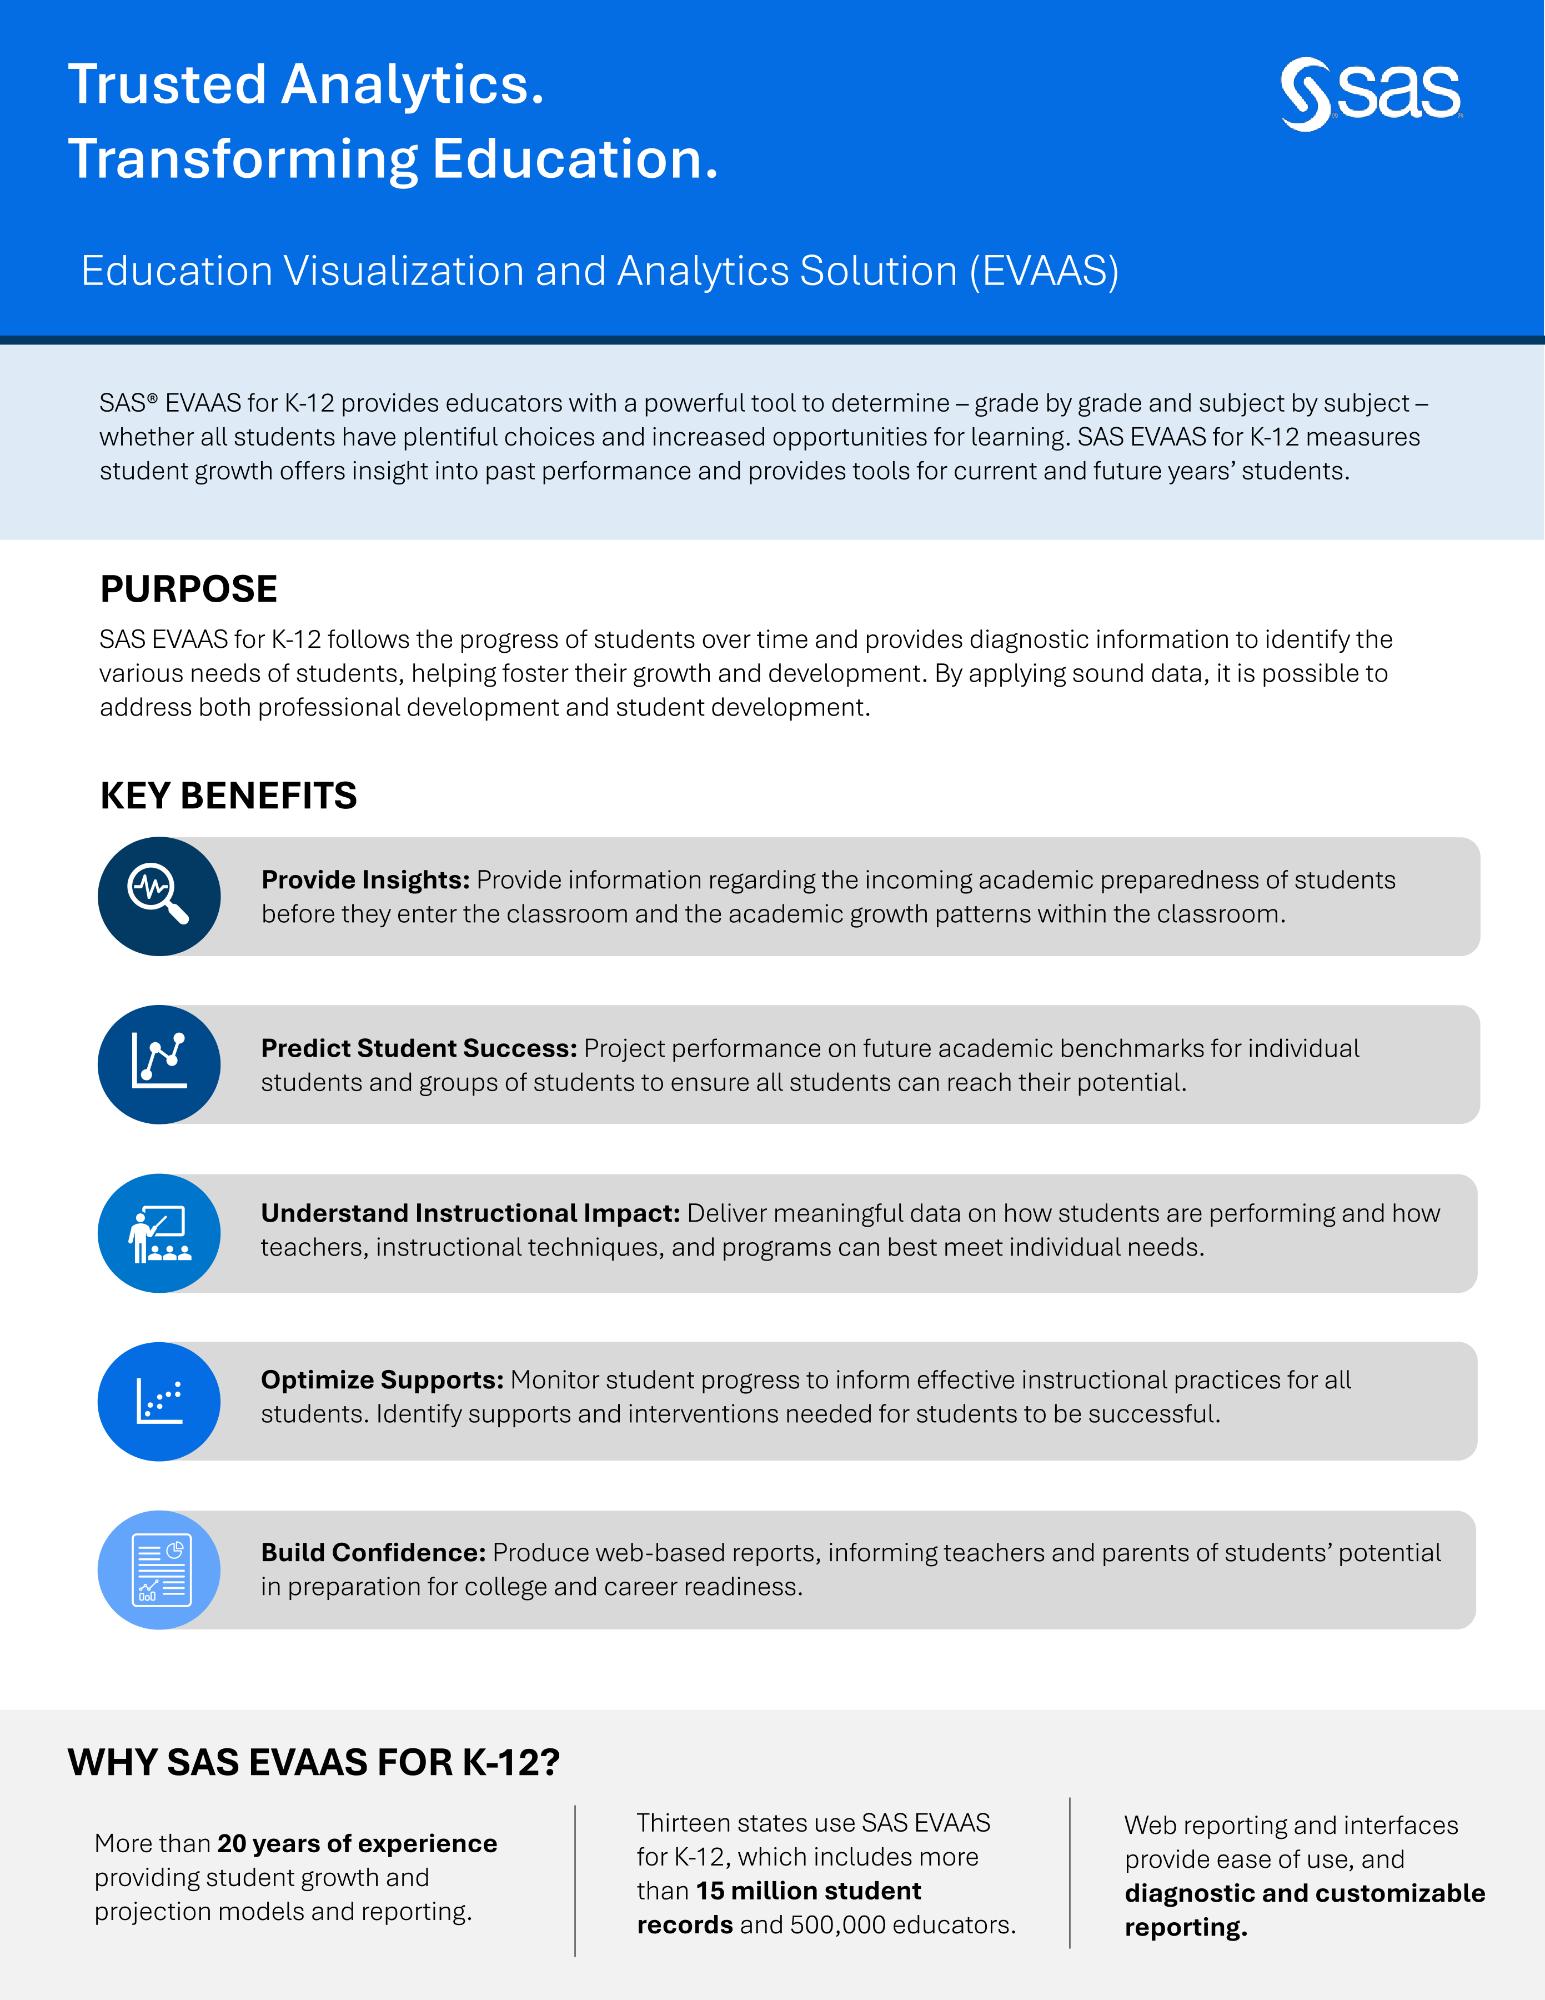 SAS Brochure image on how analytics is transforming education